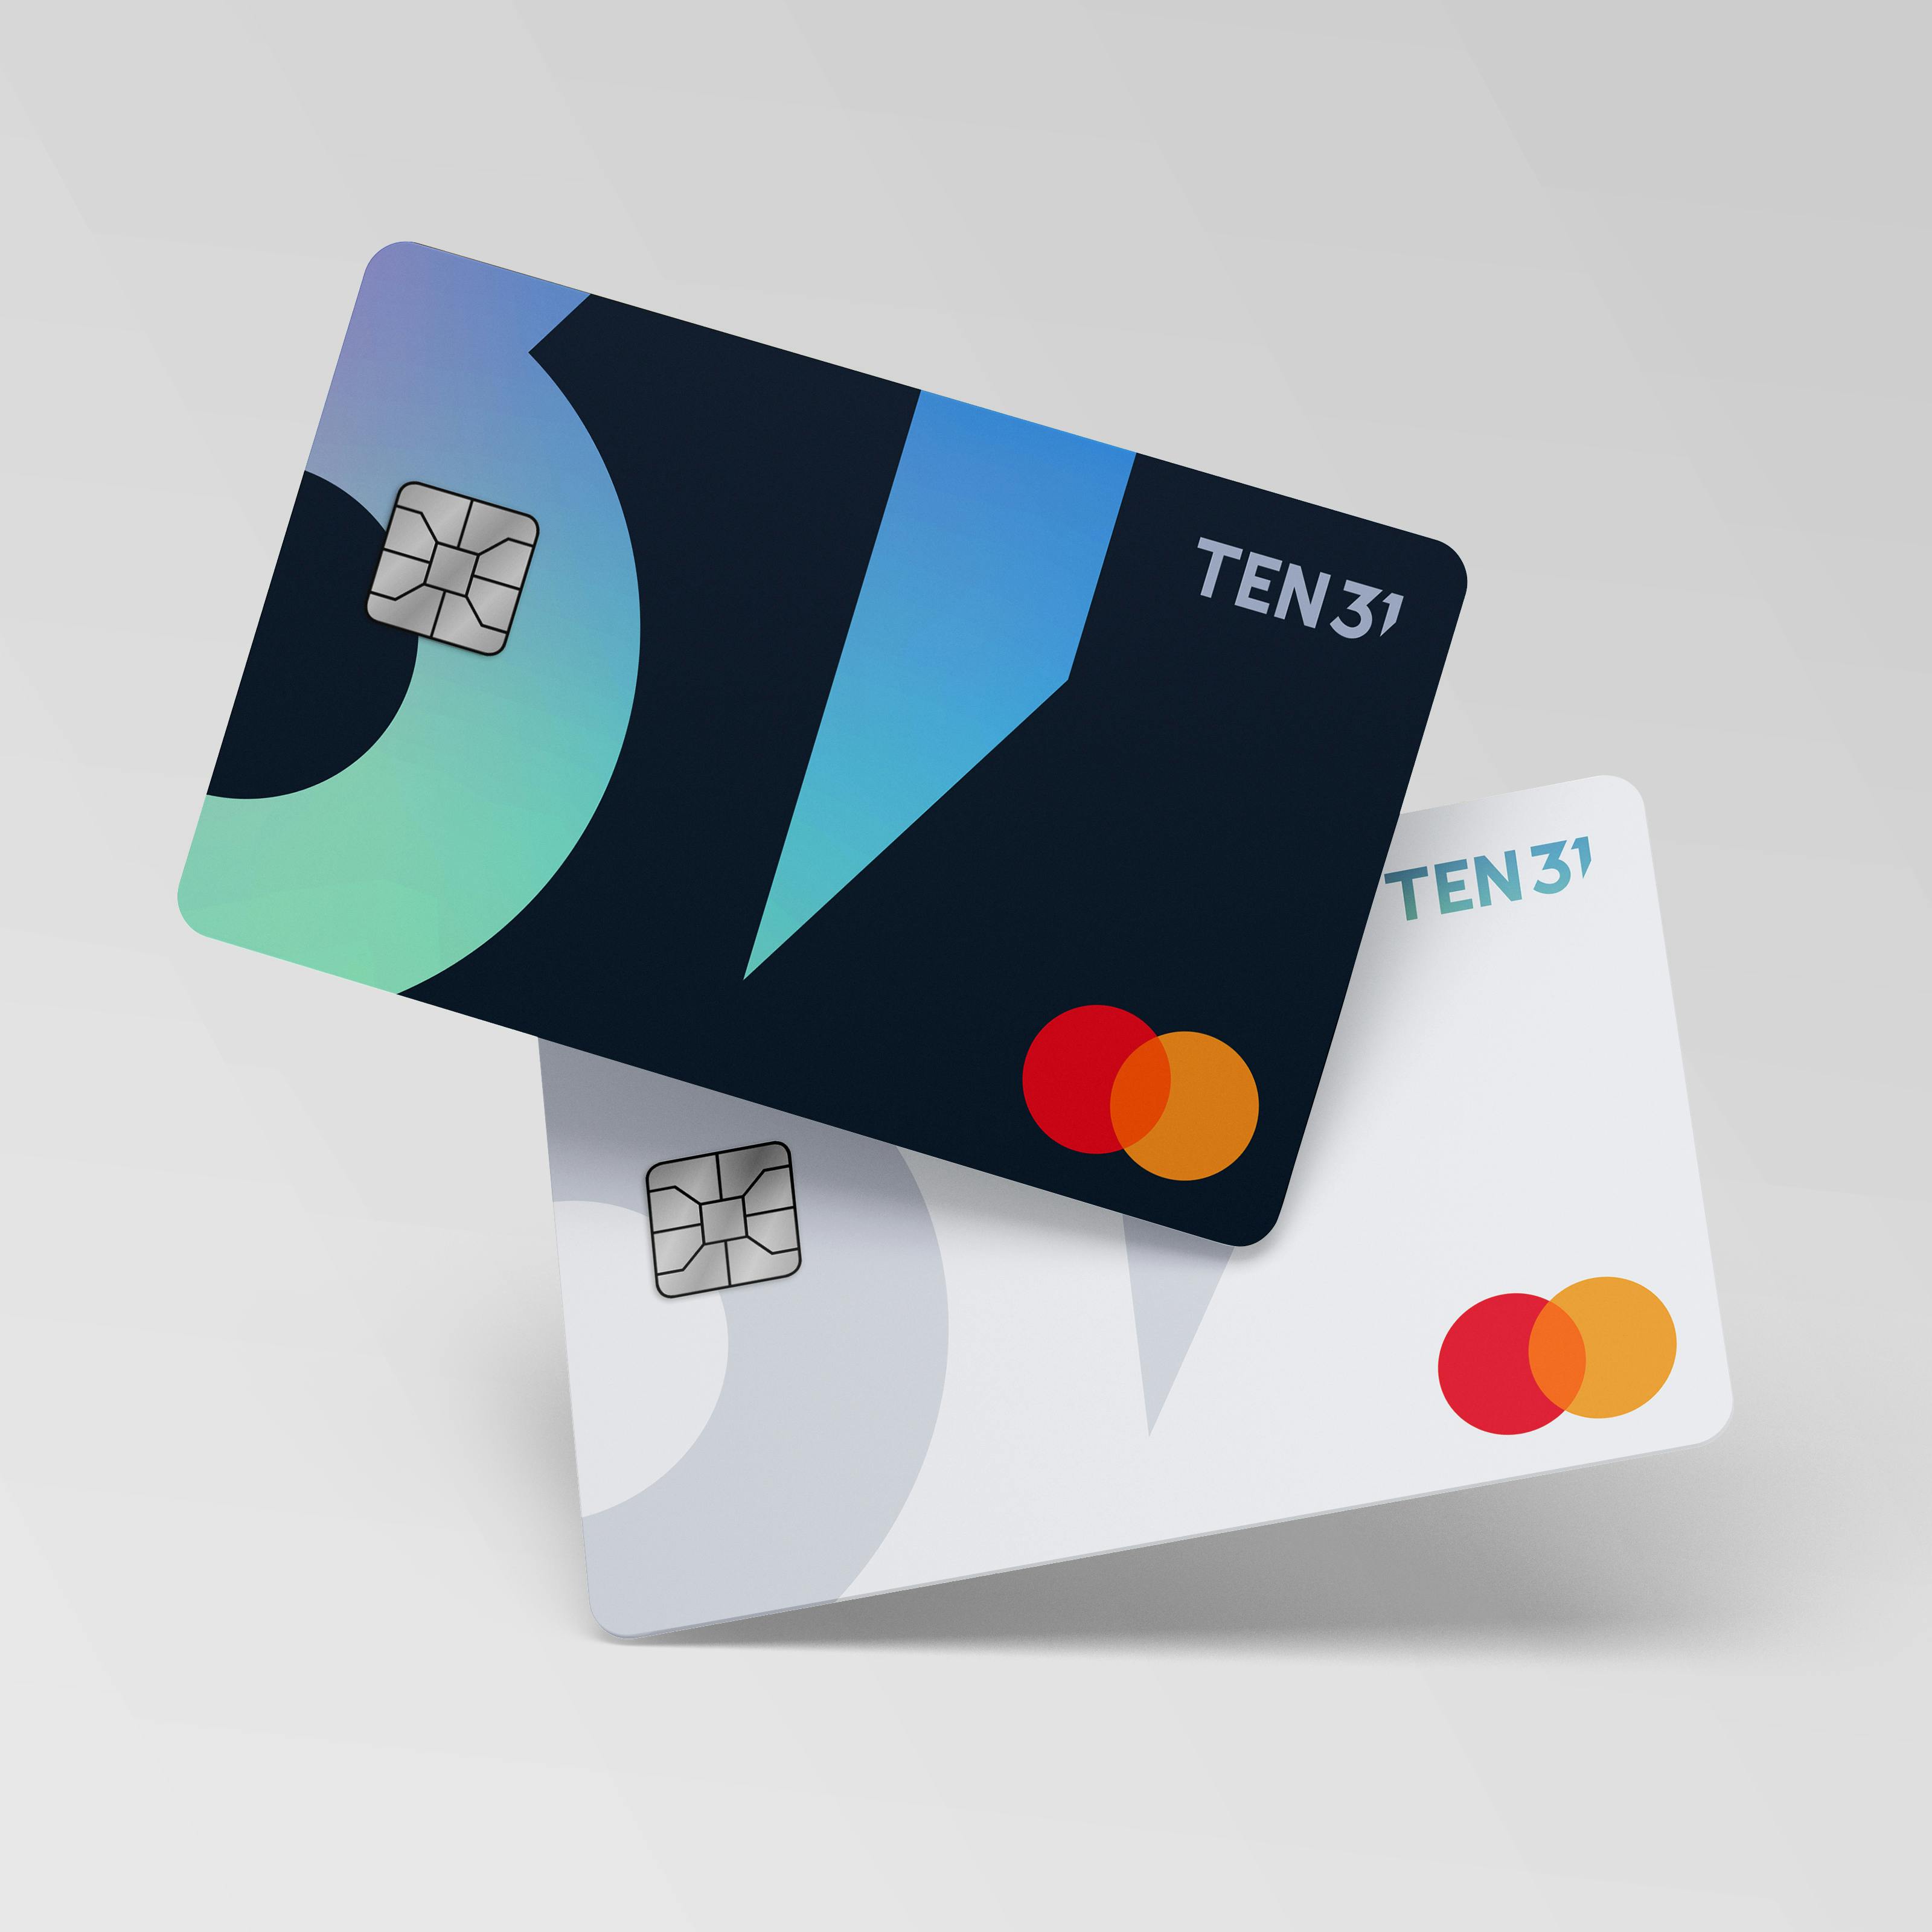 TEN31 Credit Cards